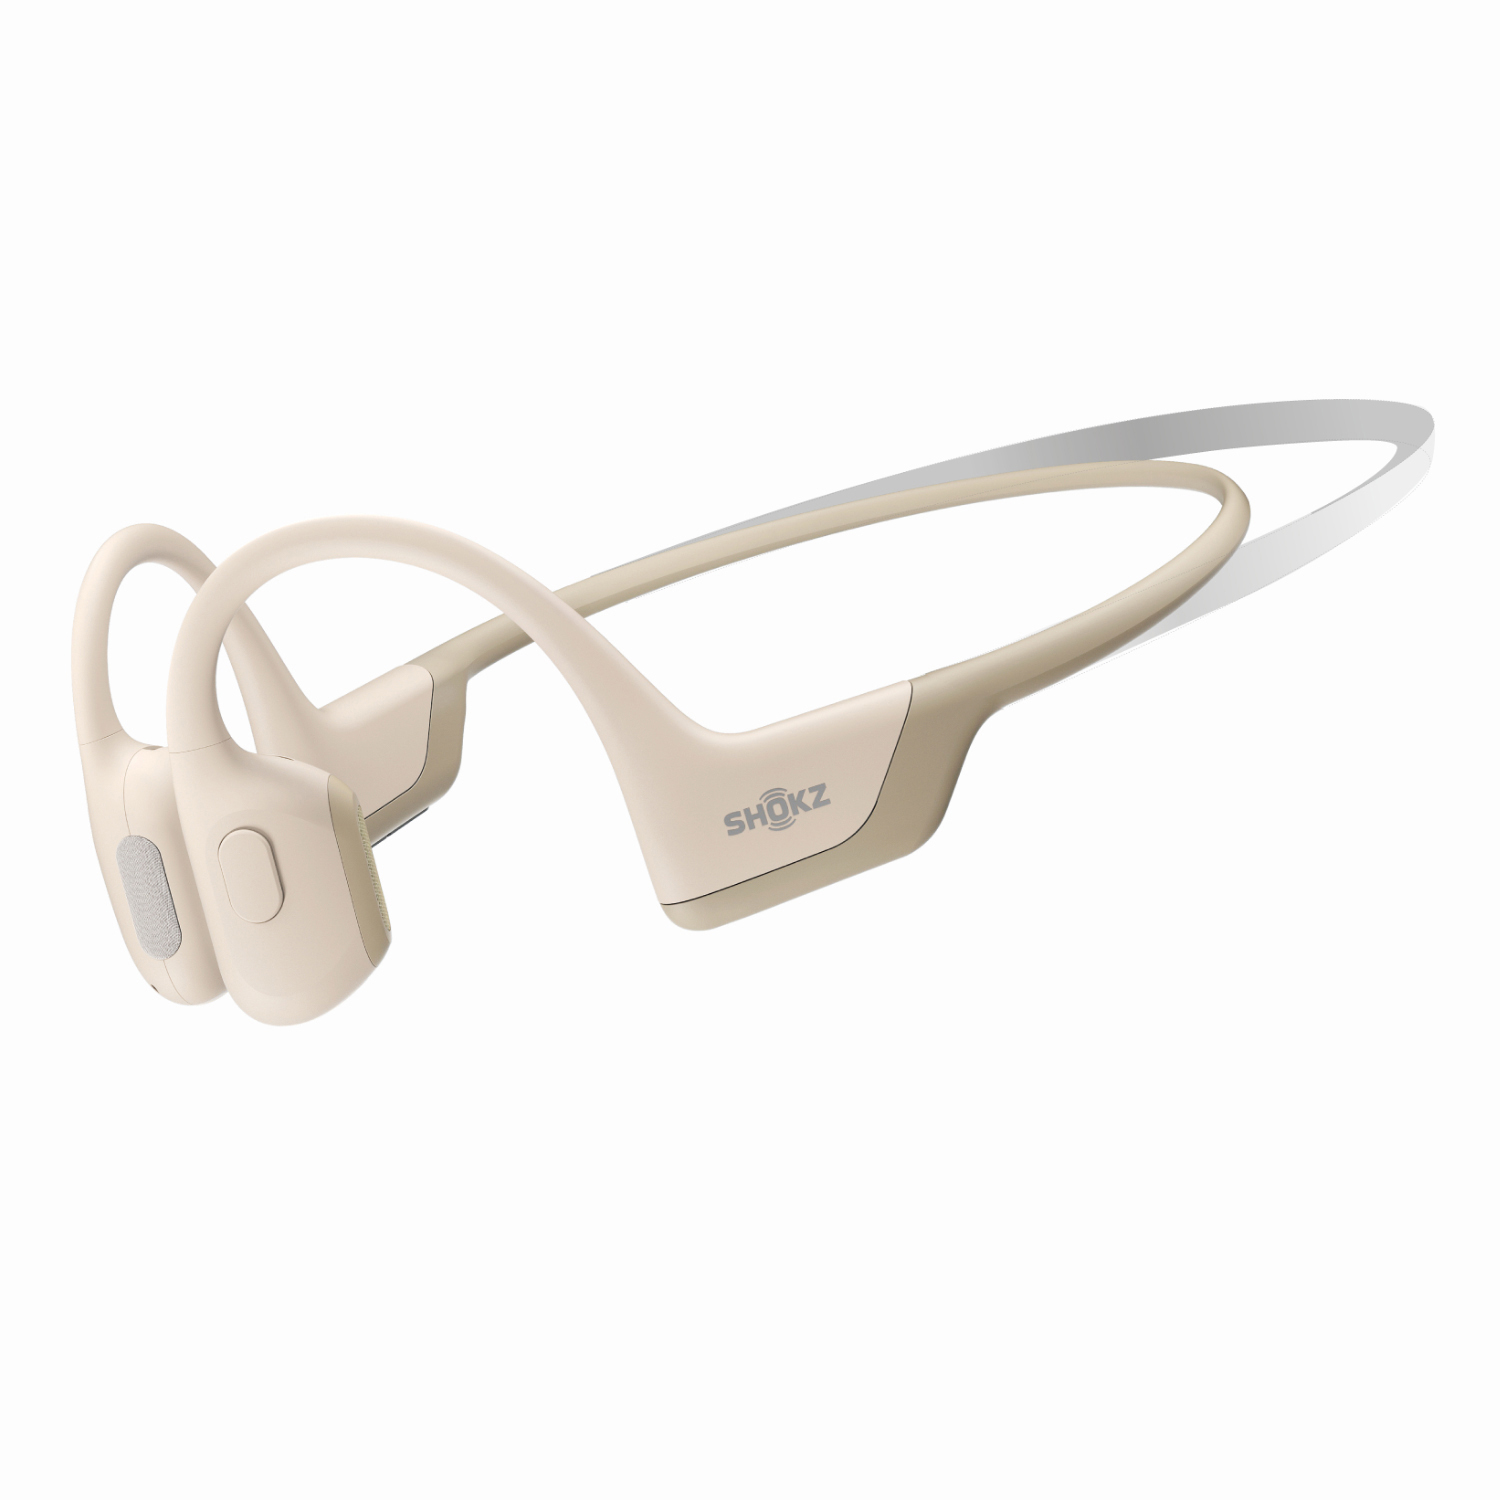 SHOKZ OpenRun Mini, Bluetooth Beige Open-ear Kopfhörer Pro